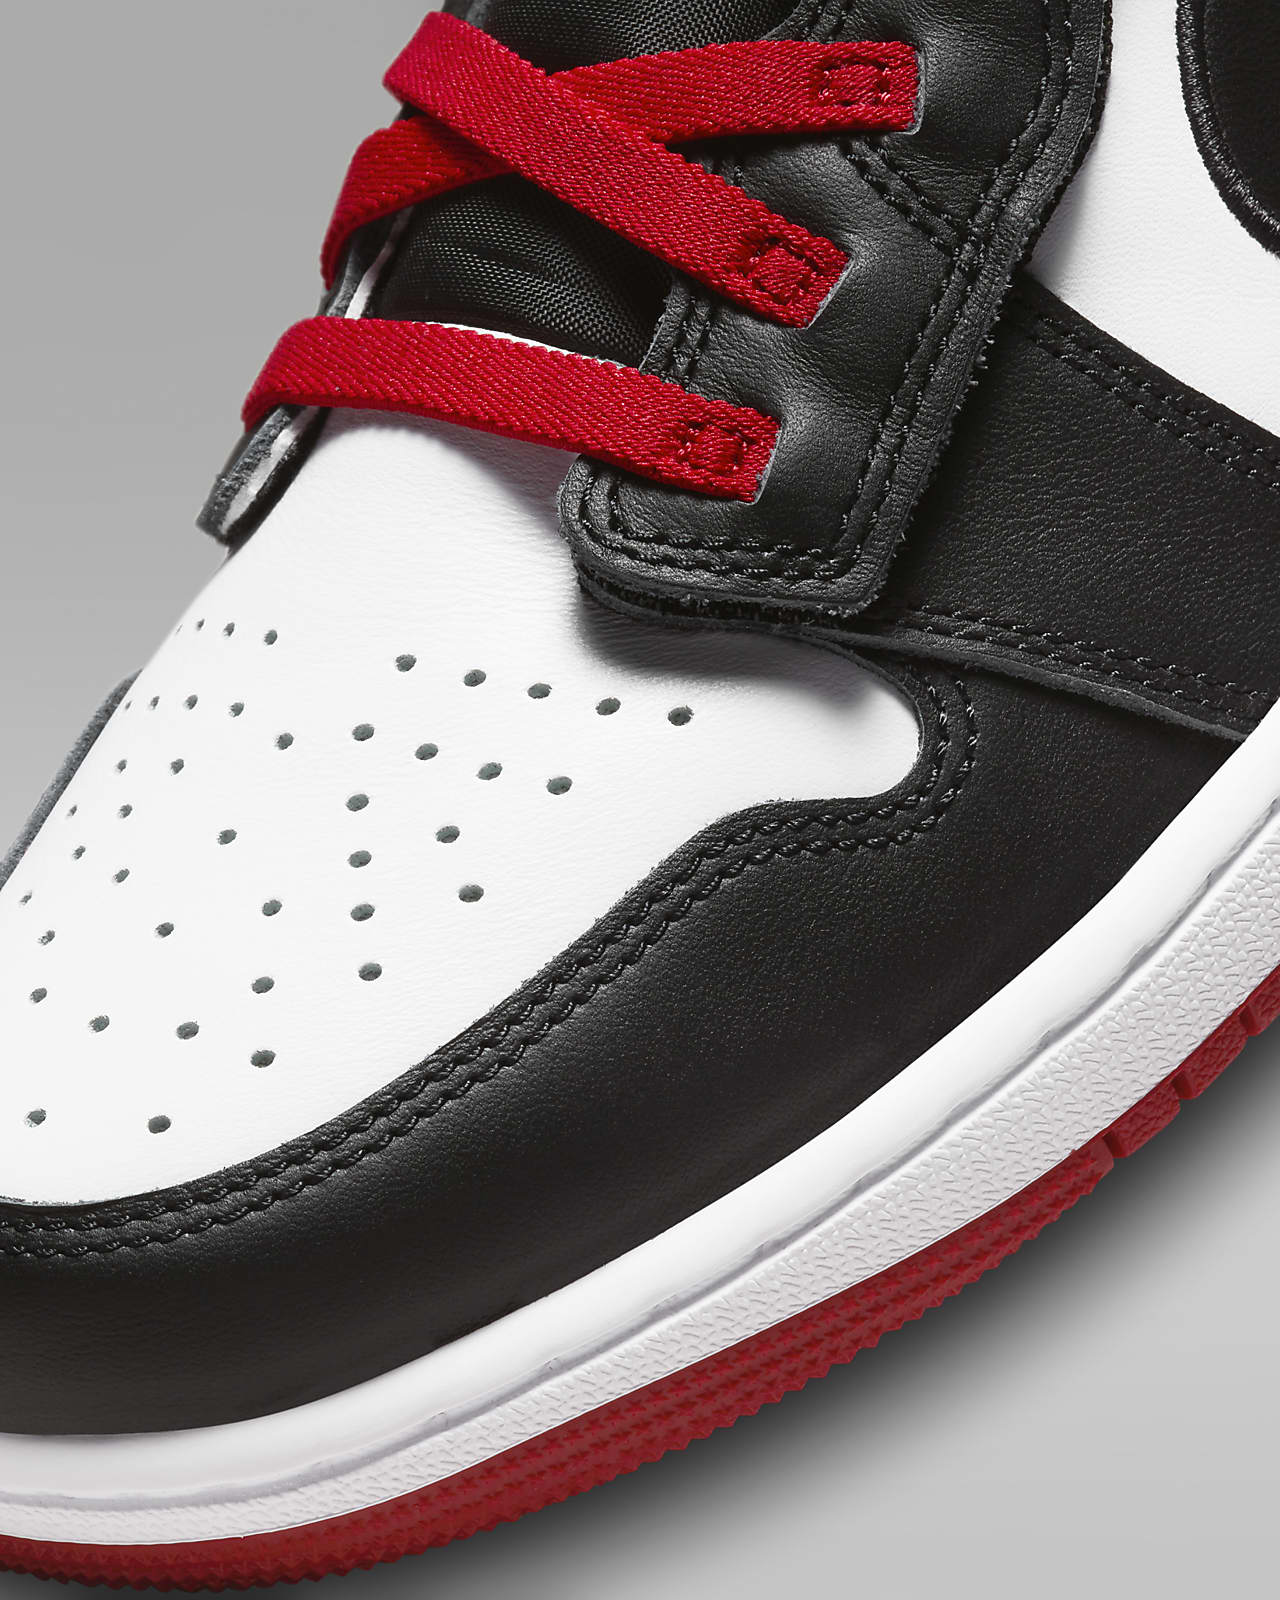 Nike Air Jordan 1 Retro High Black White | Size 13, Sneaker